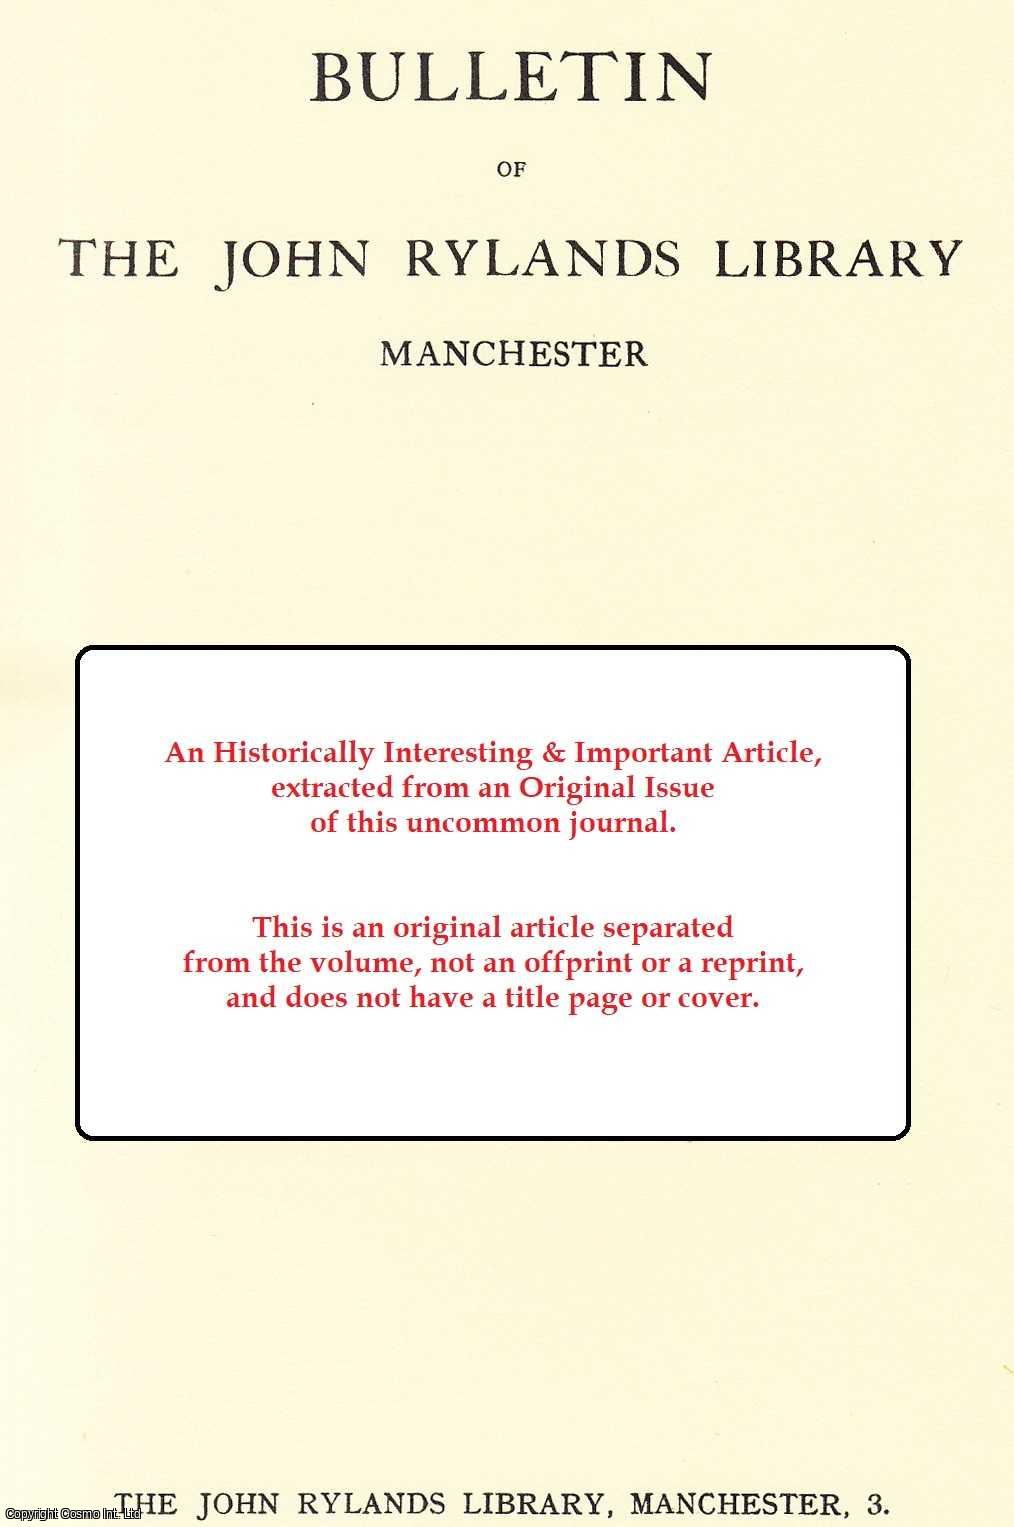 Rev. John Bowman - Samaritan Studies. An original article from the Bulletin of the John Rylands Library Manchester, 1958.